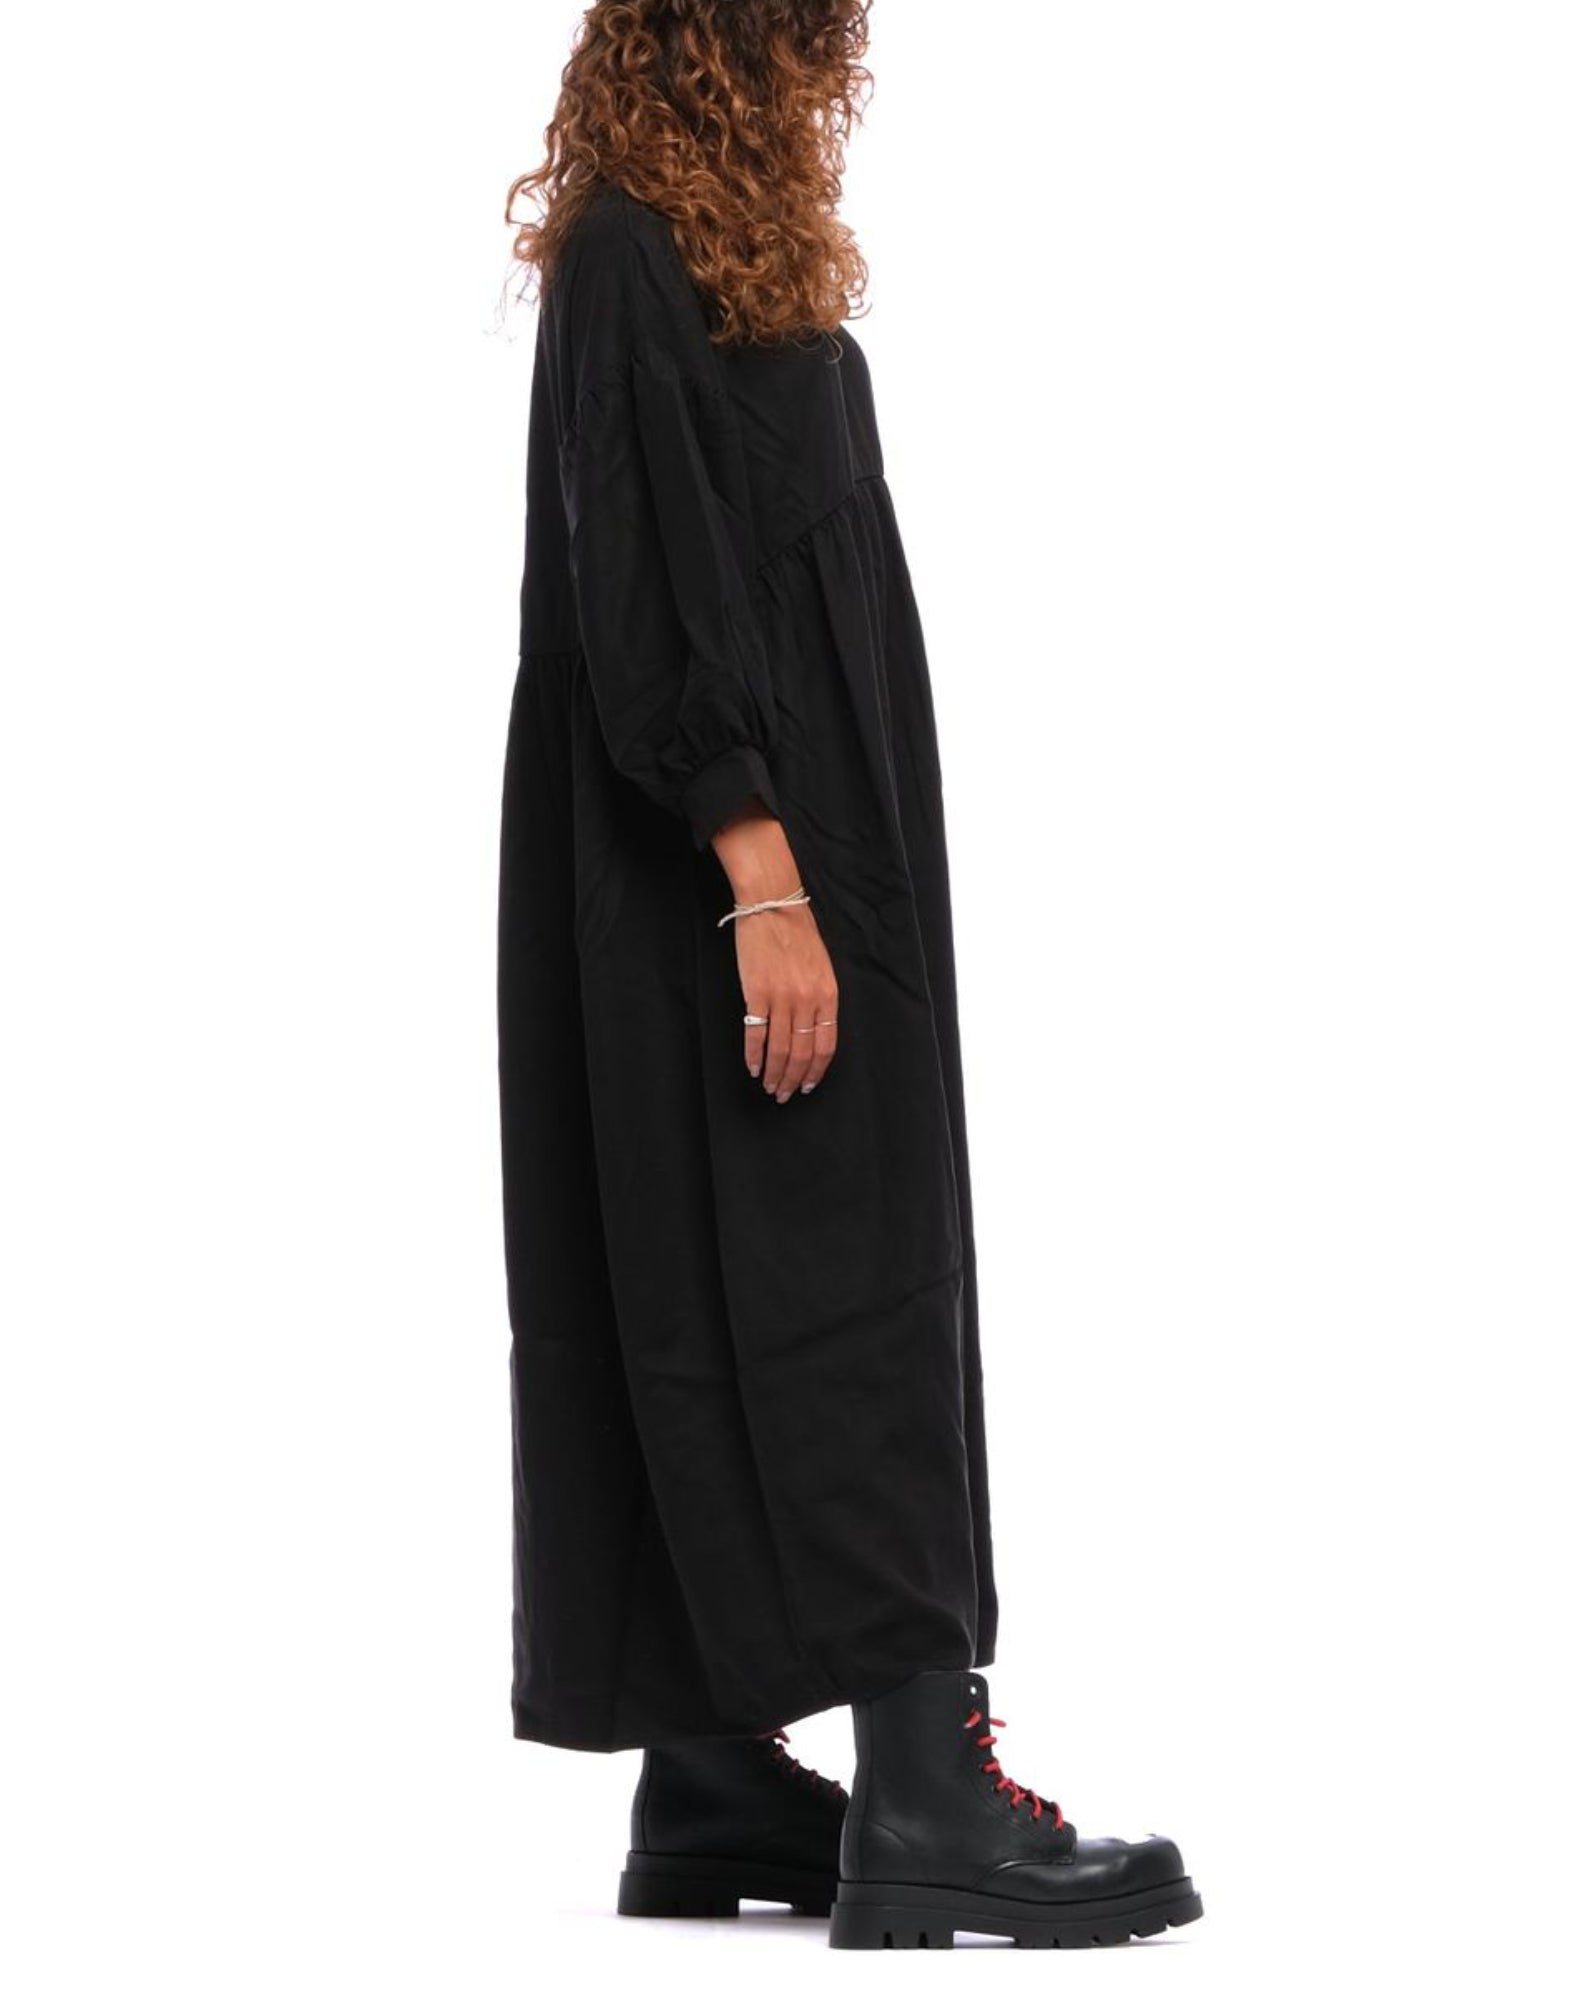 Dress for women RITA ROW 1887 VE BLACK